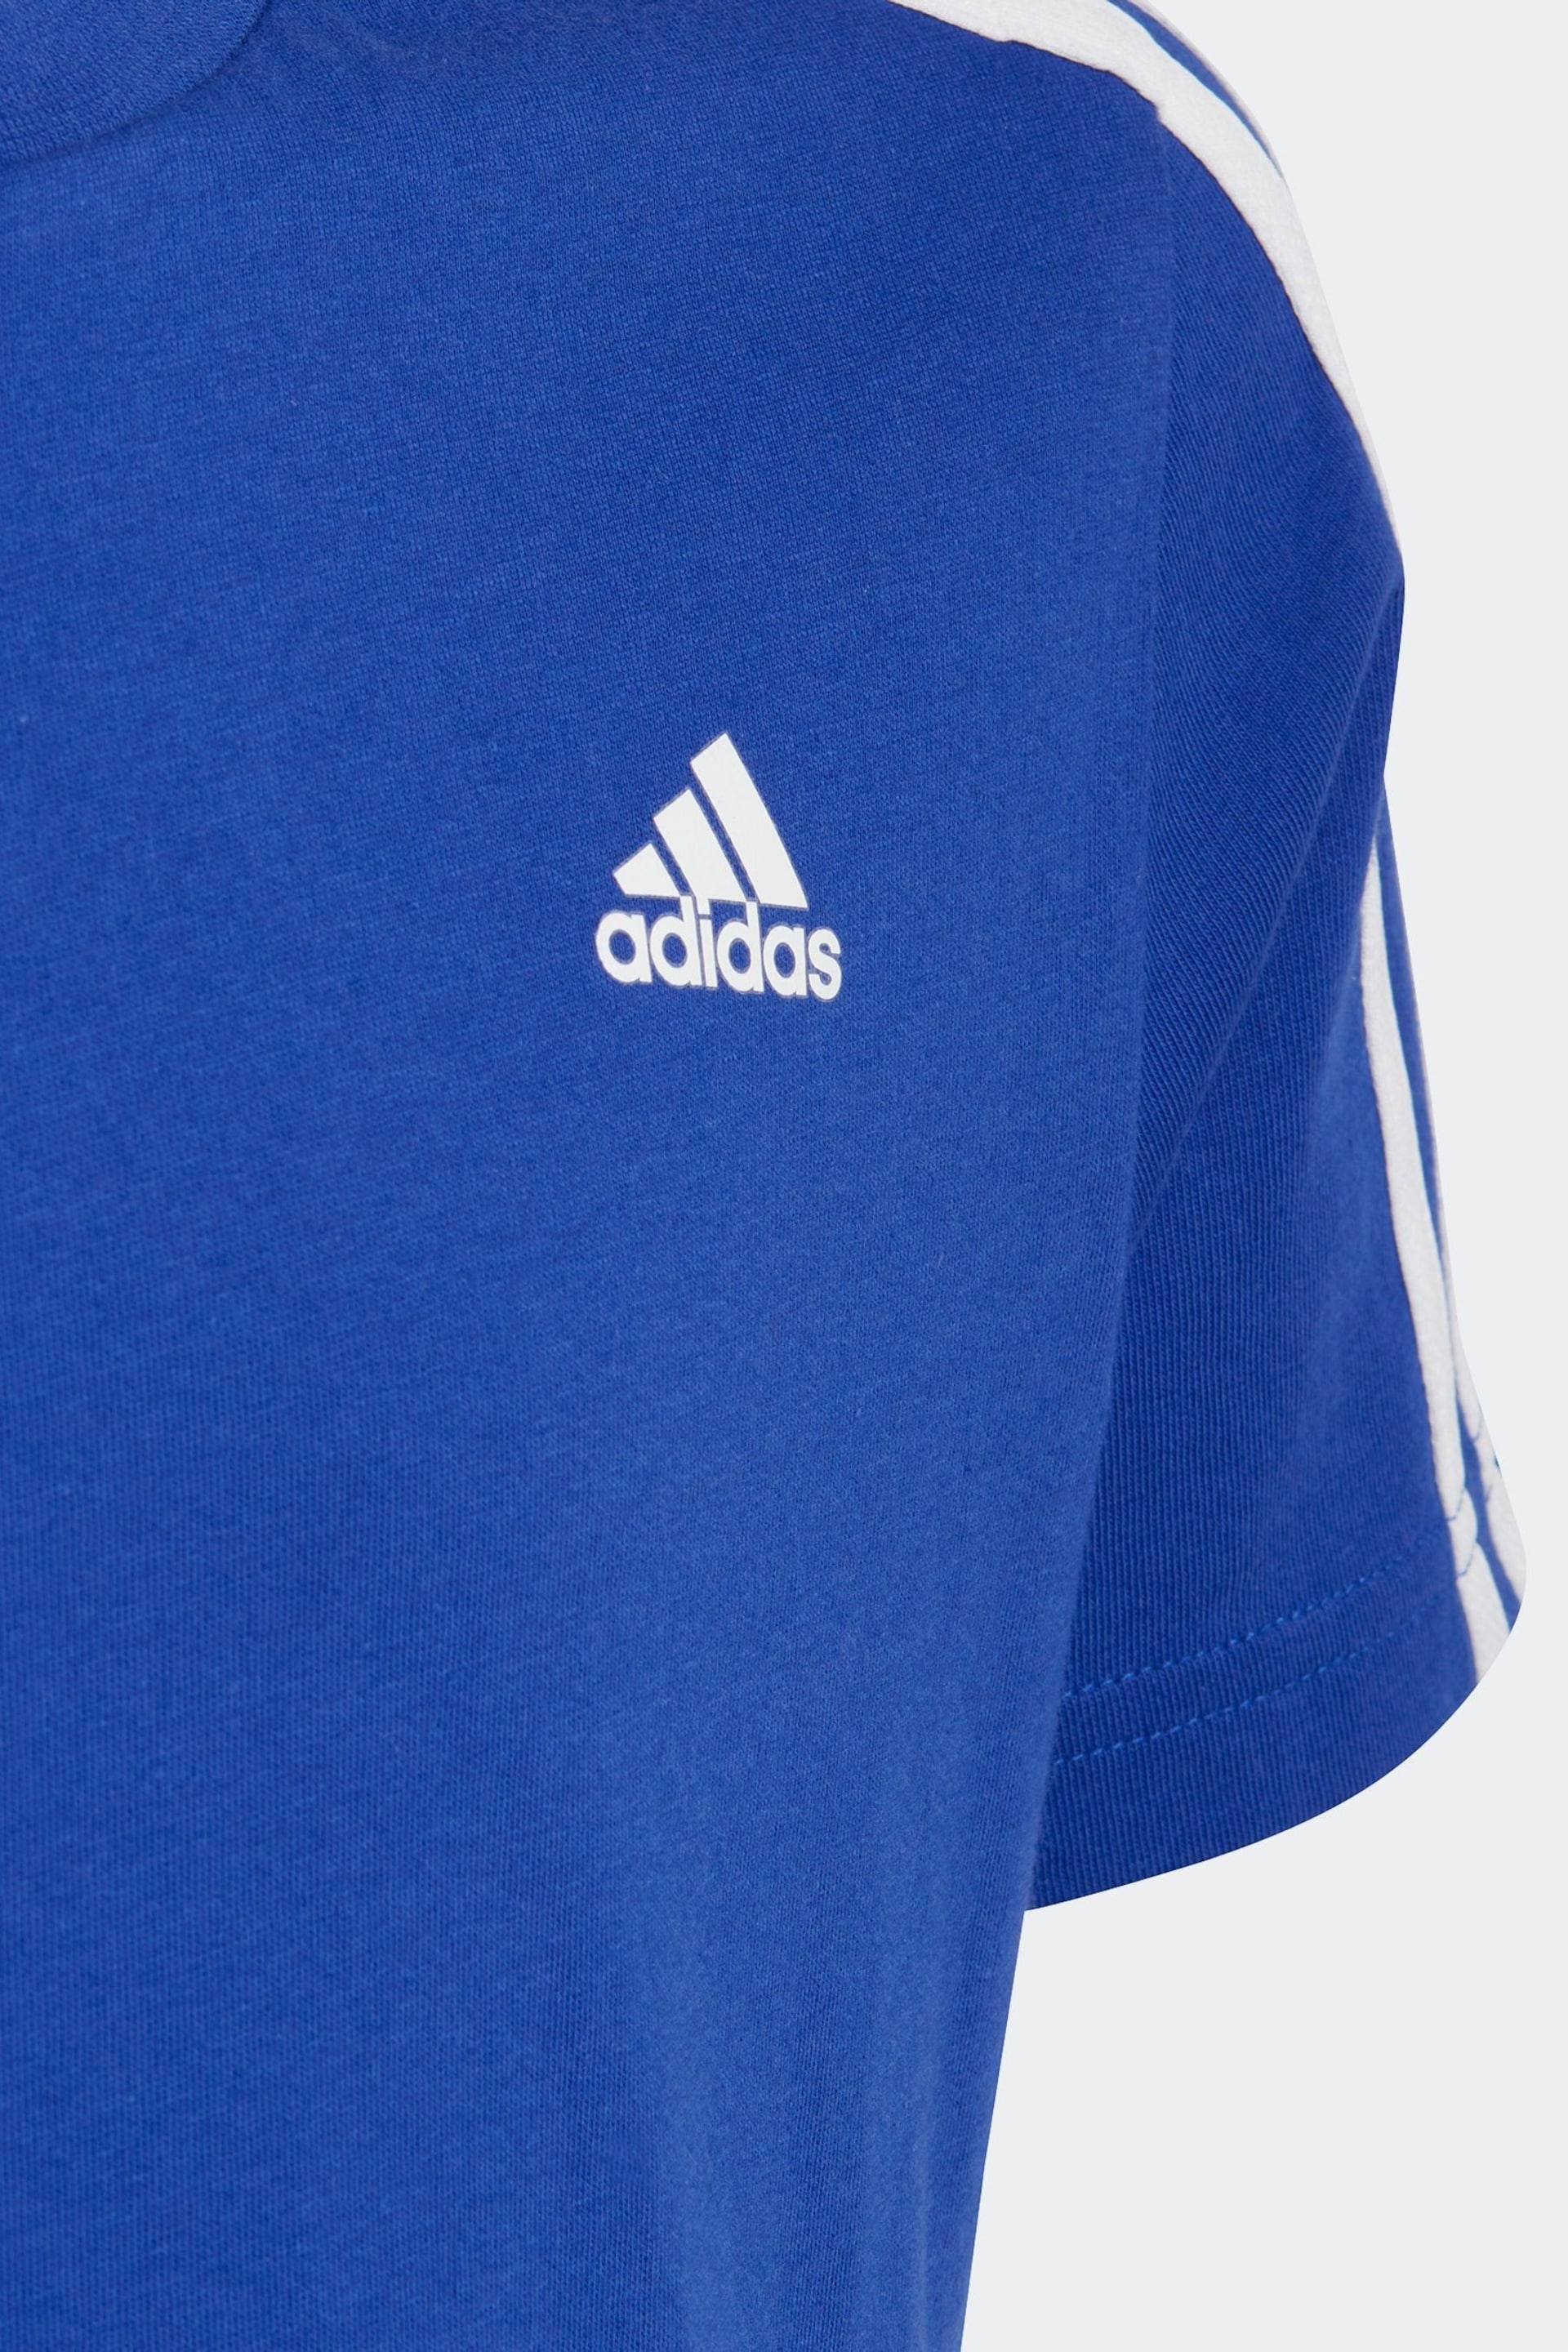 adidas Blue Essentials 3-Stripes Cotton T-Shirt - Image 4 of 5